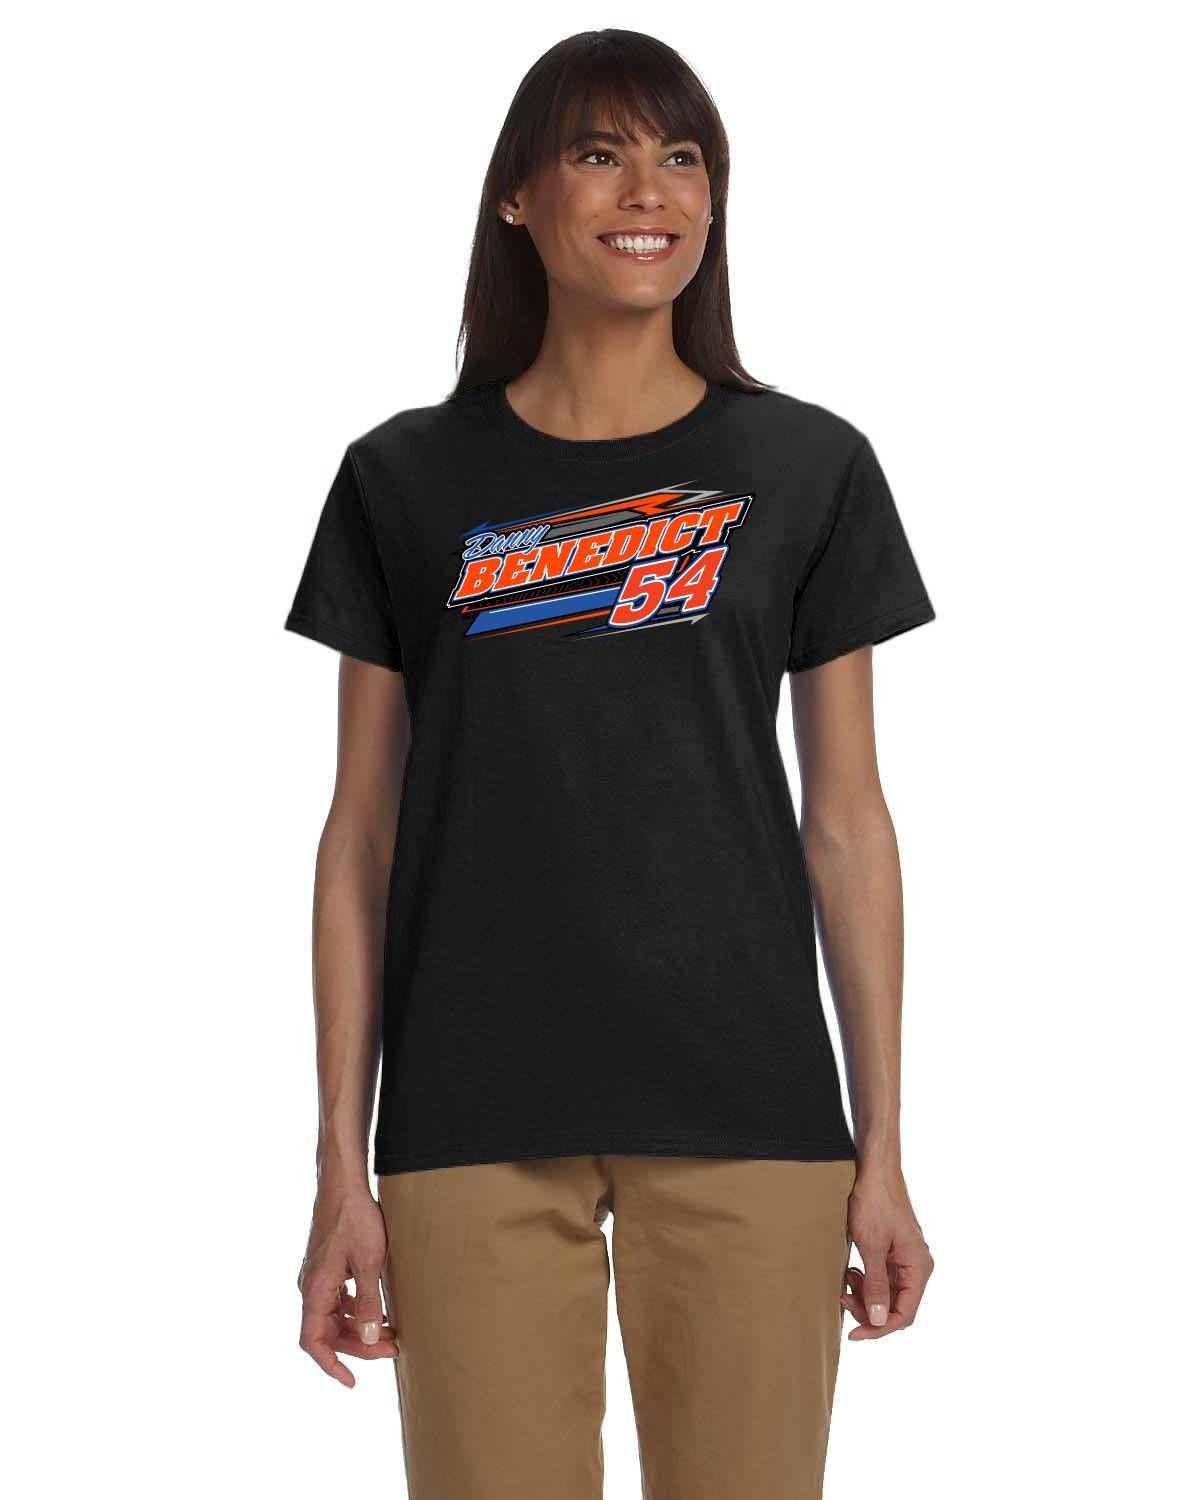 Danny Benedict Racing Ladies' T-Shirt